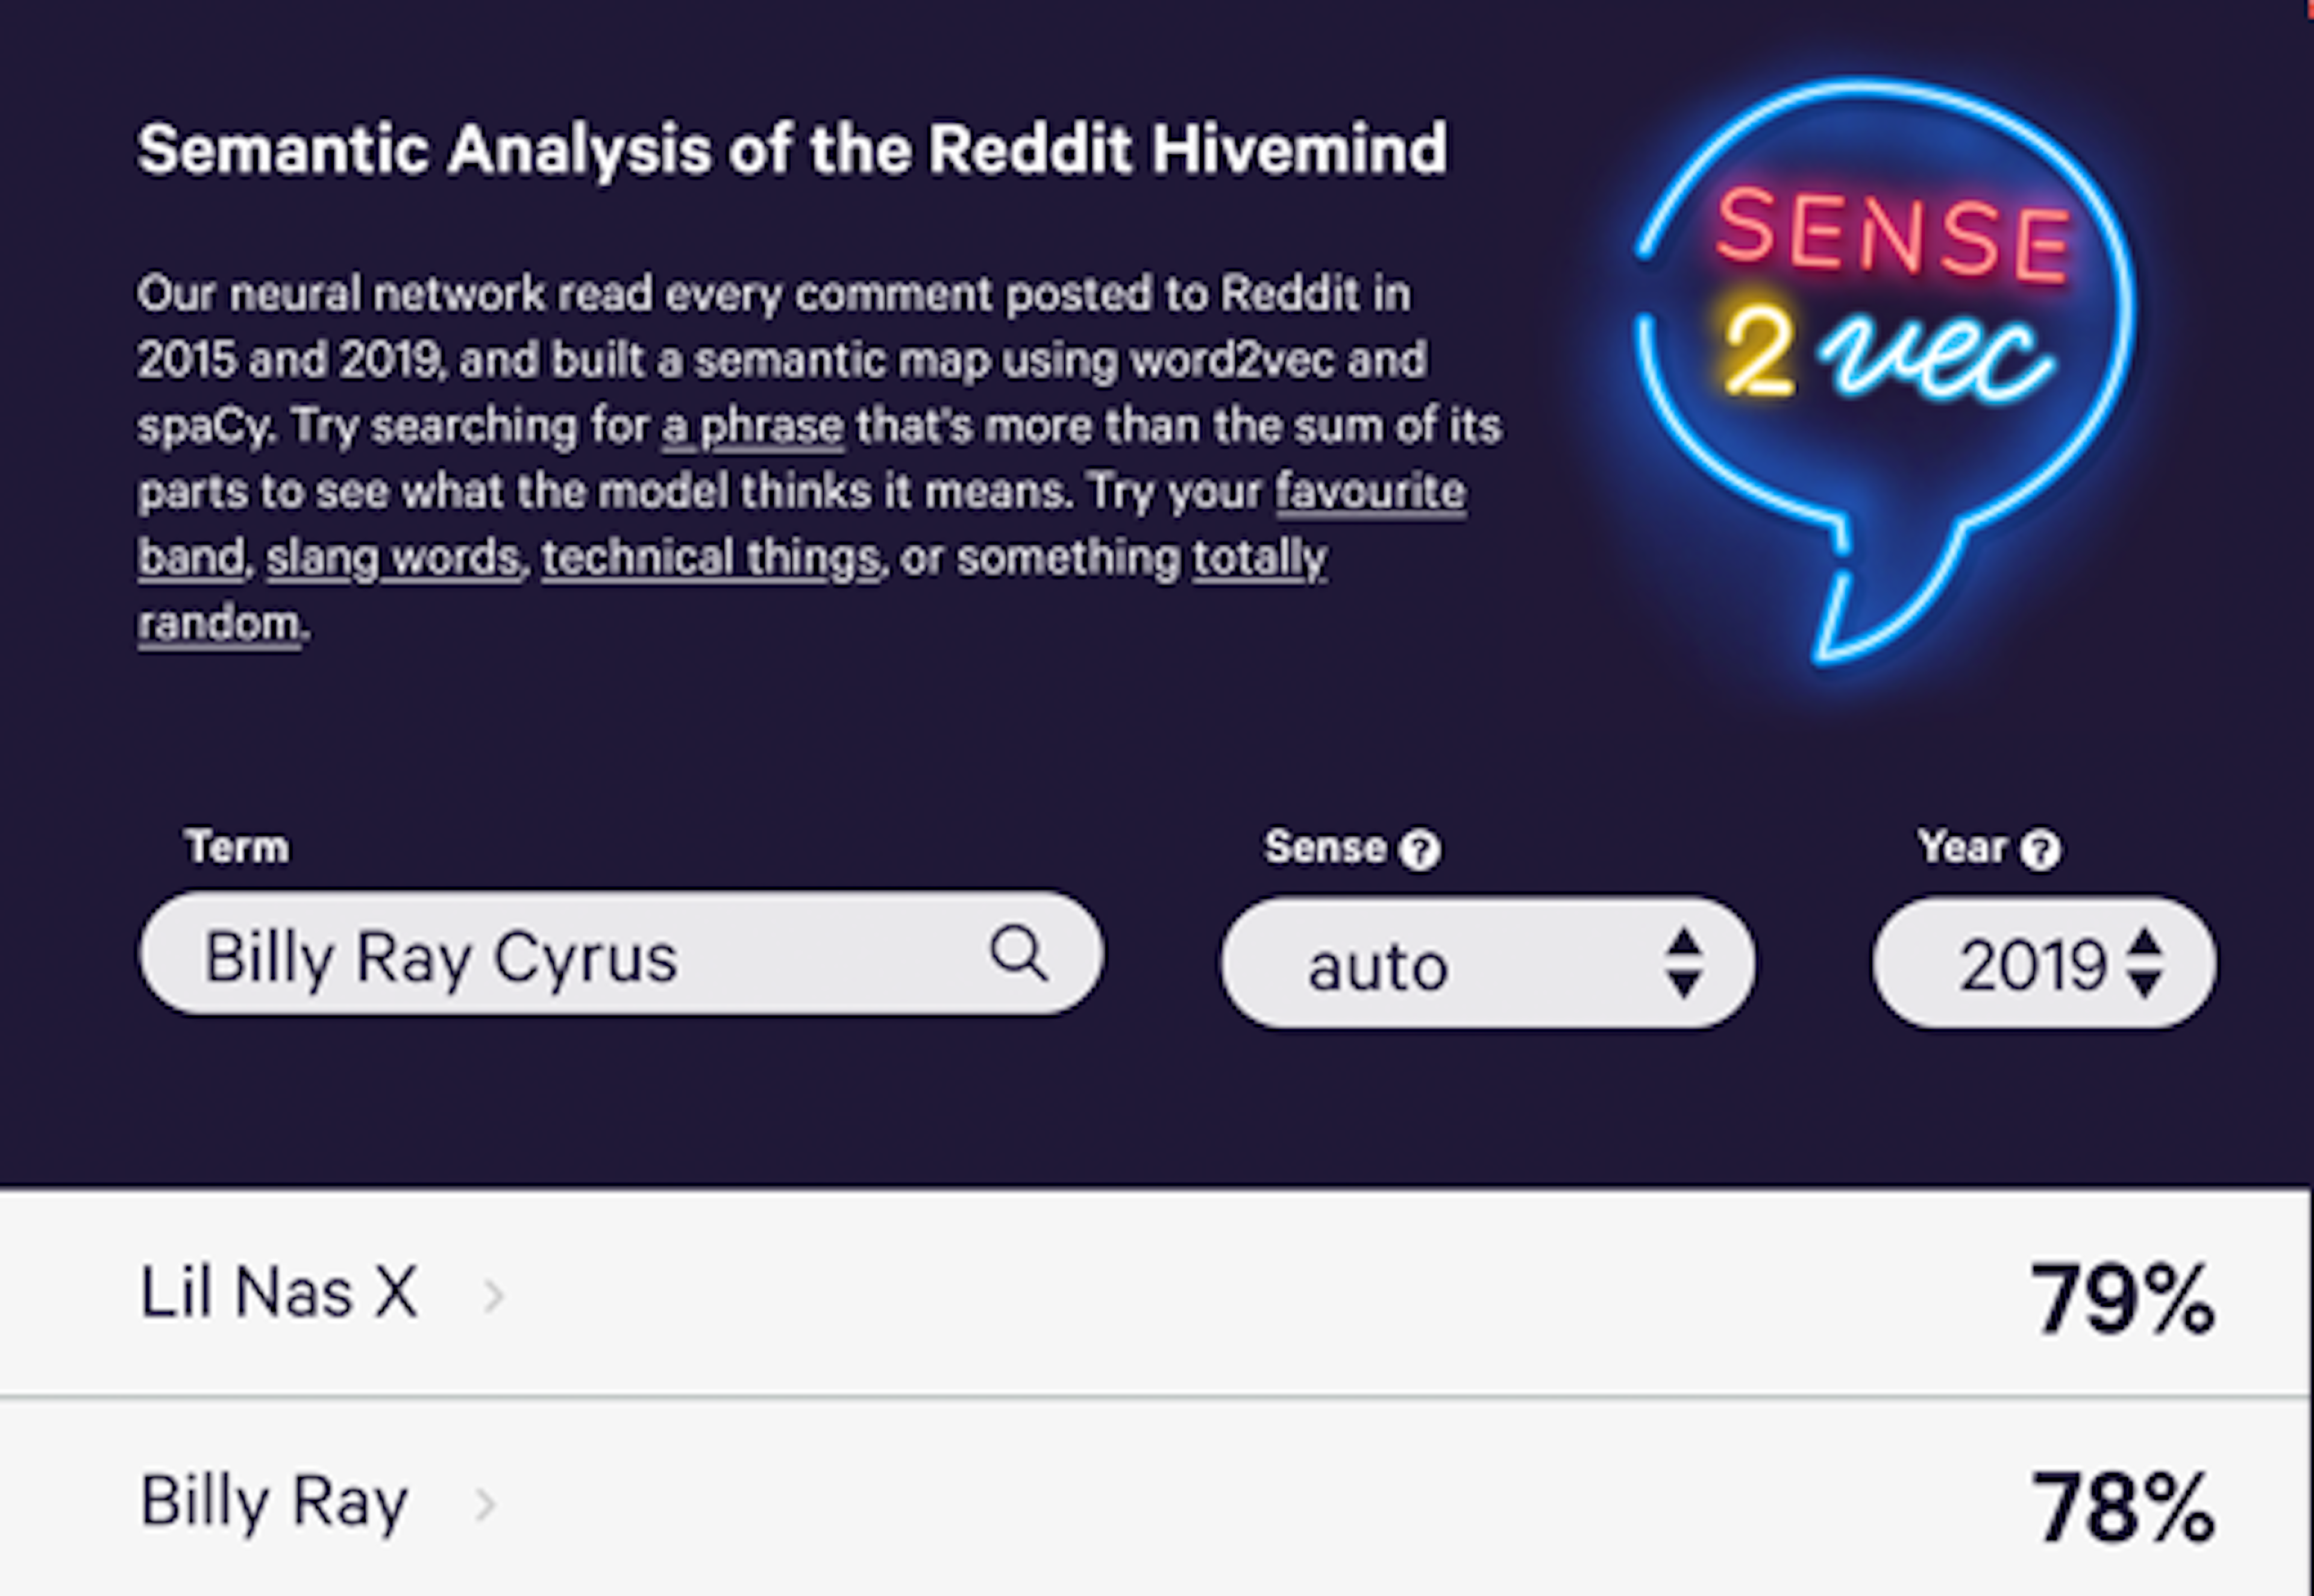 sense2vec: Semantic Analysis of the Reddit Hivemind